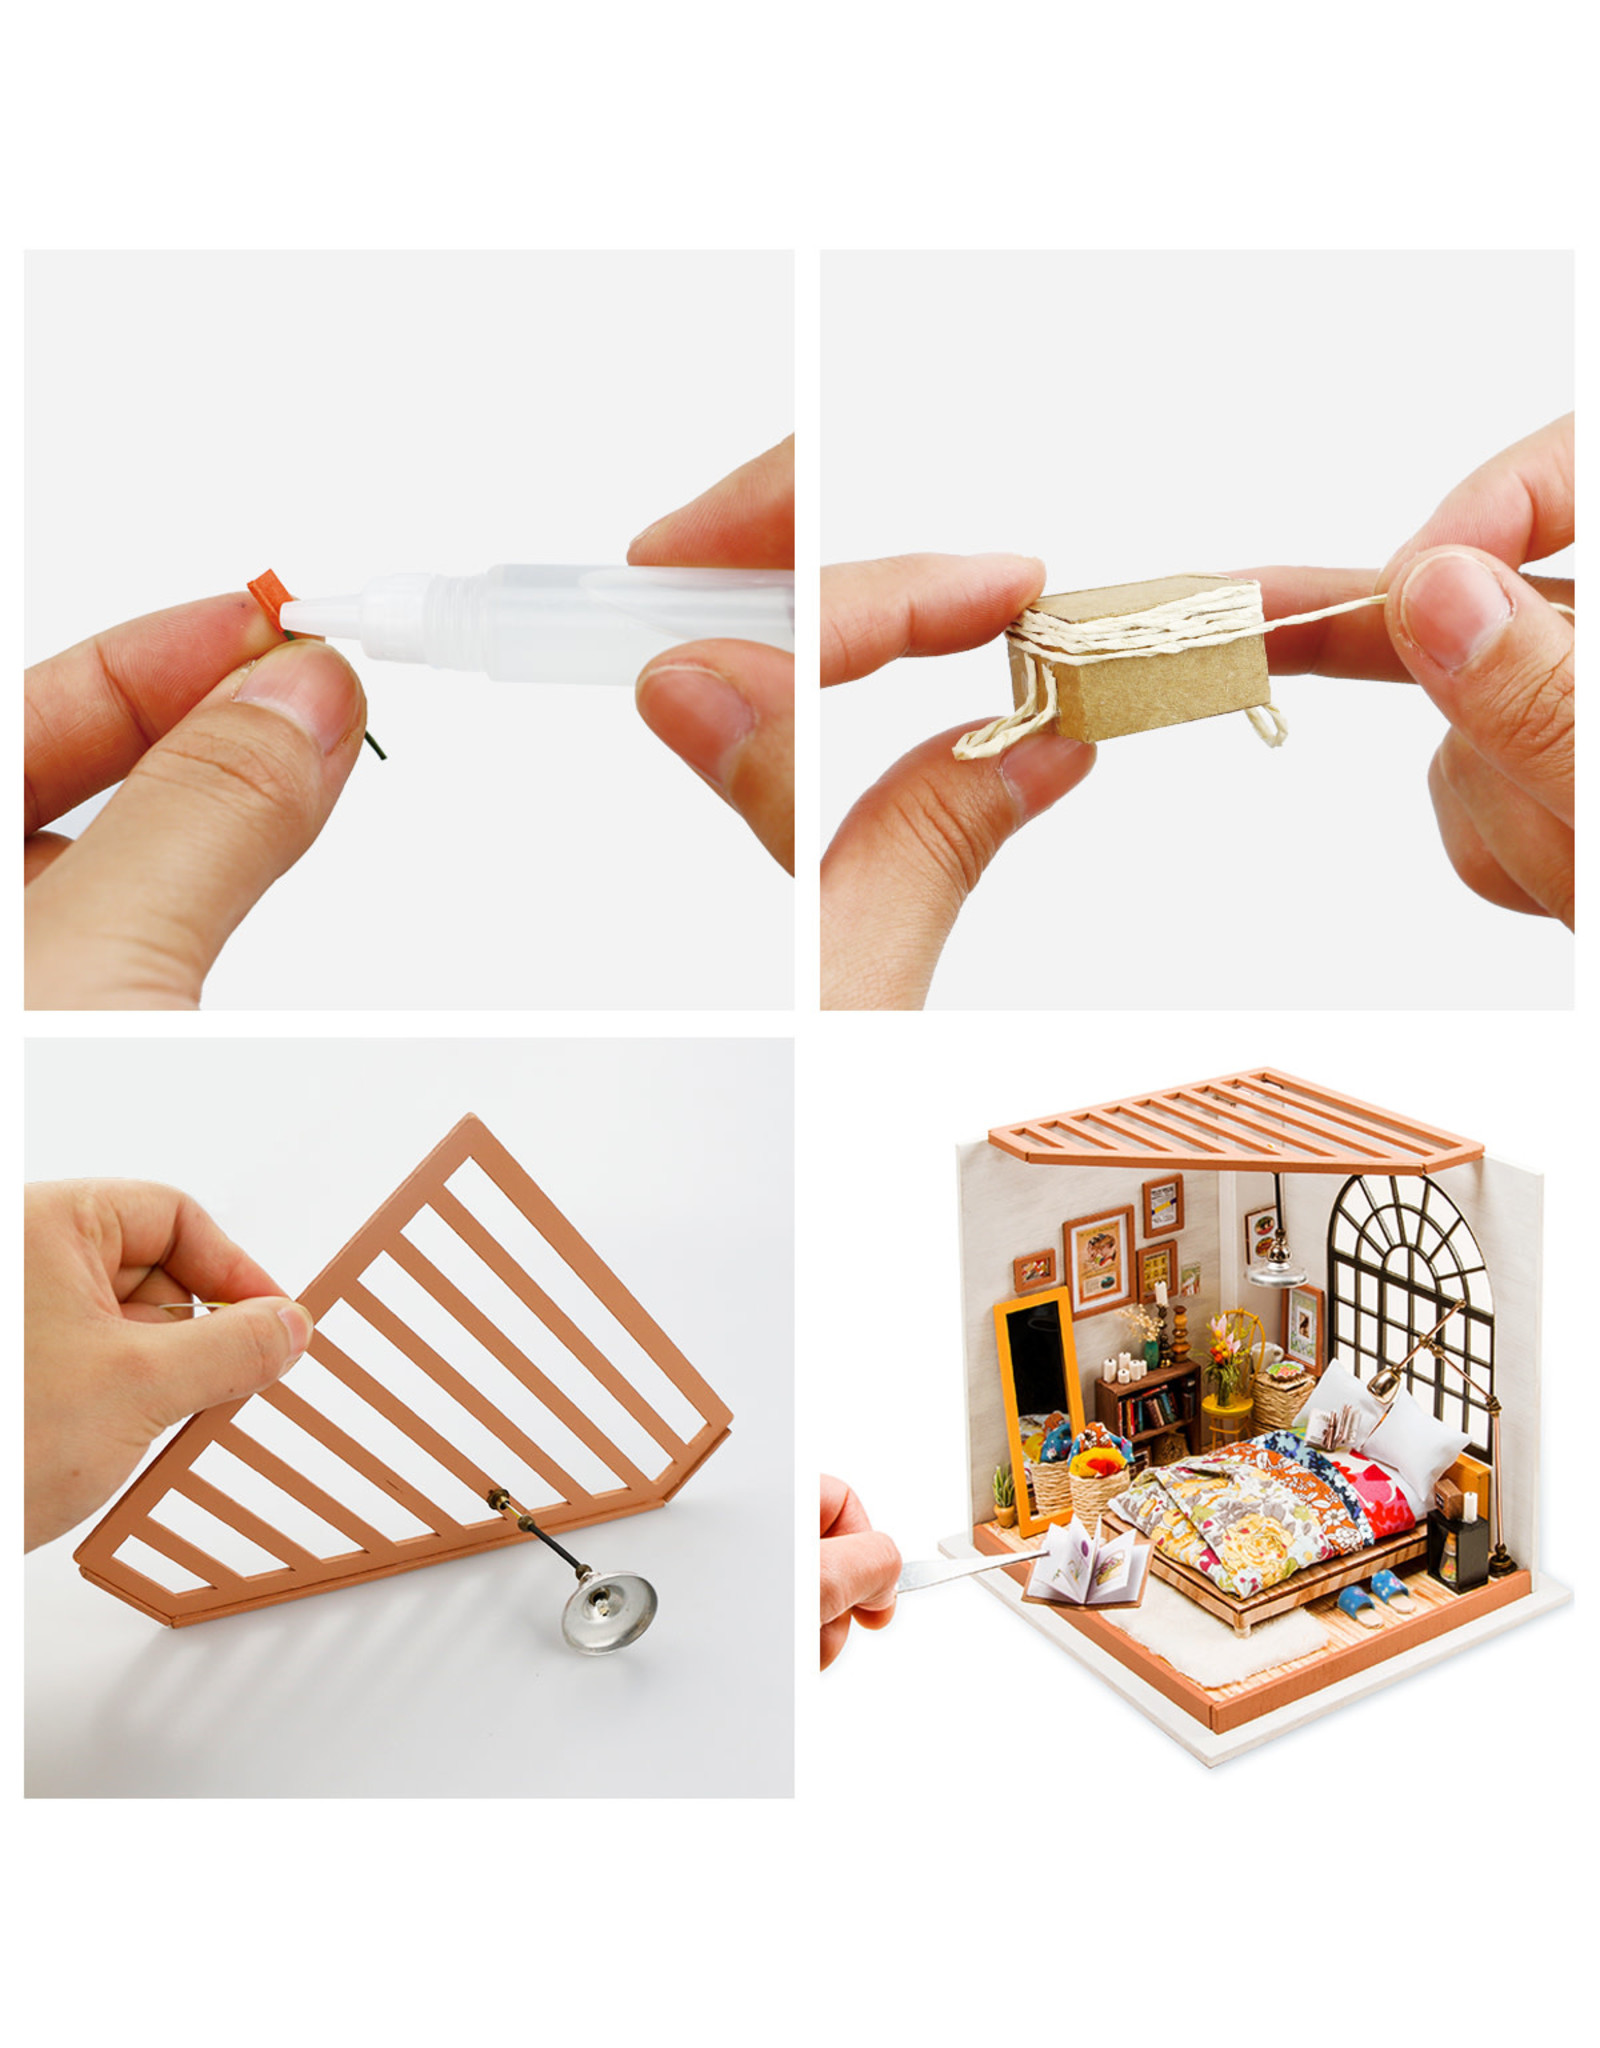 Rolife Alice's Dreamy Bedroom DG107 - Rolife DIY Miniature Dollhouse